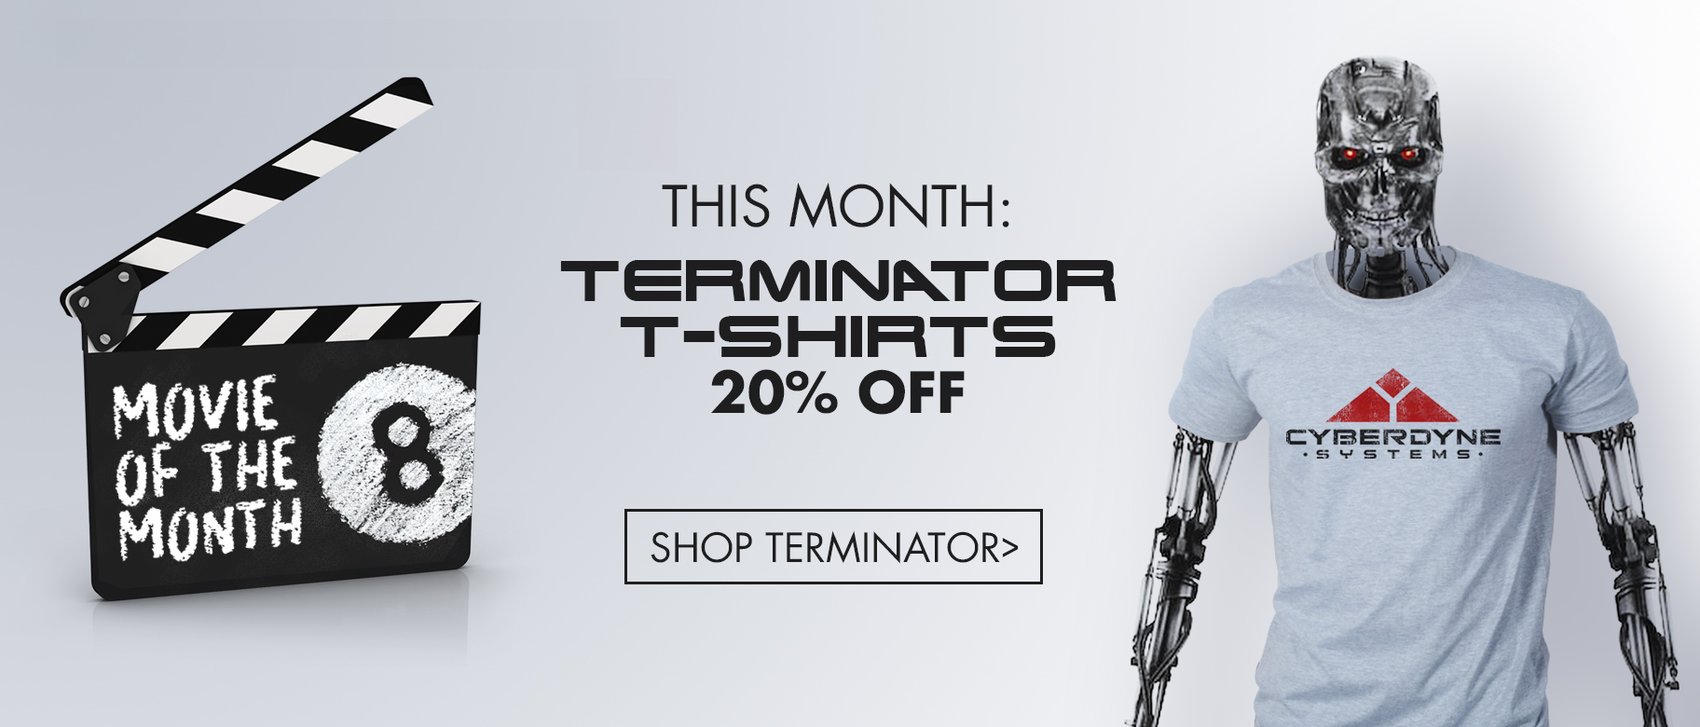 8Ball: 20% off terminator t-shirts